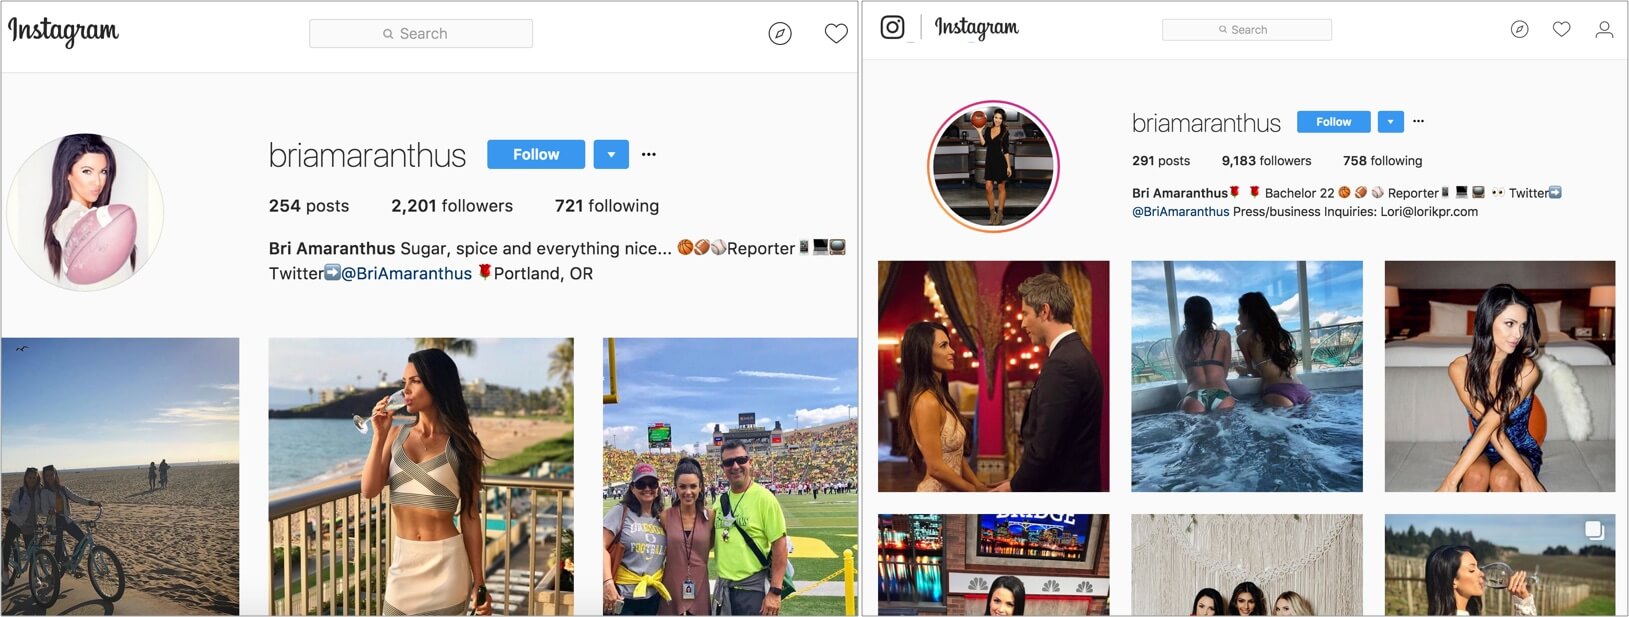 Bri Instagram Followers on The Bachelor